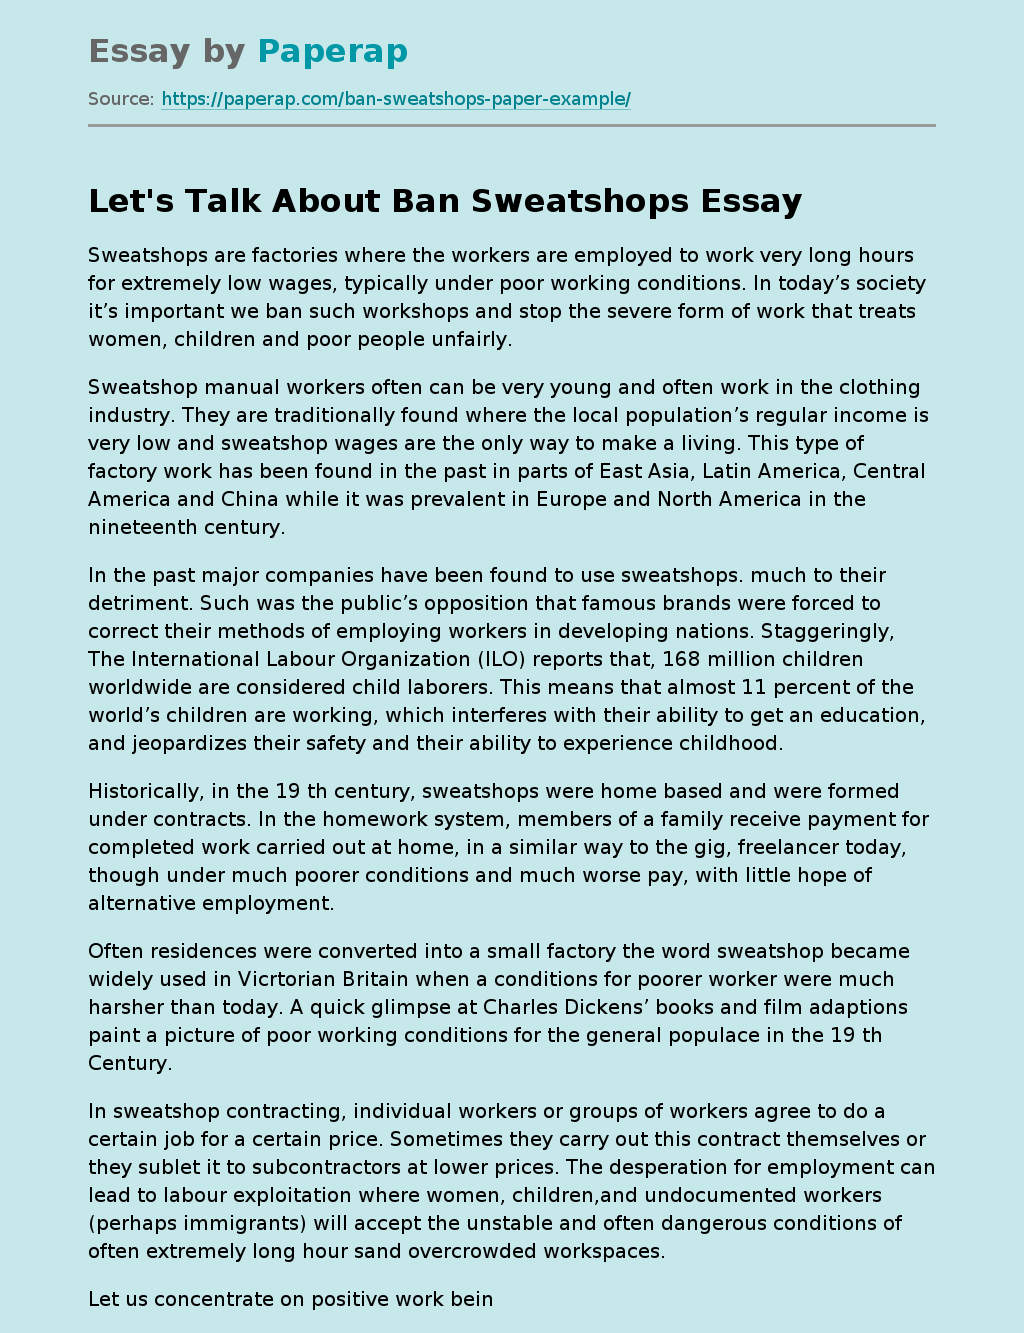 Let's Talk About Ban Sweatshops